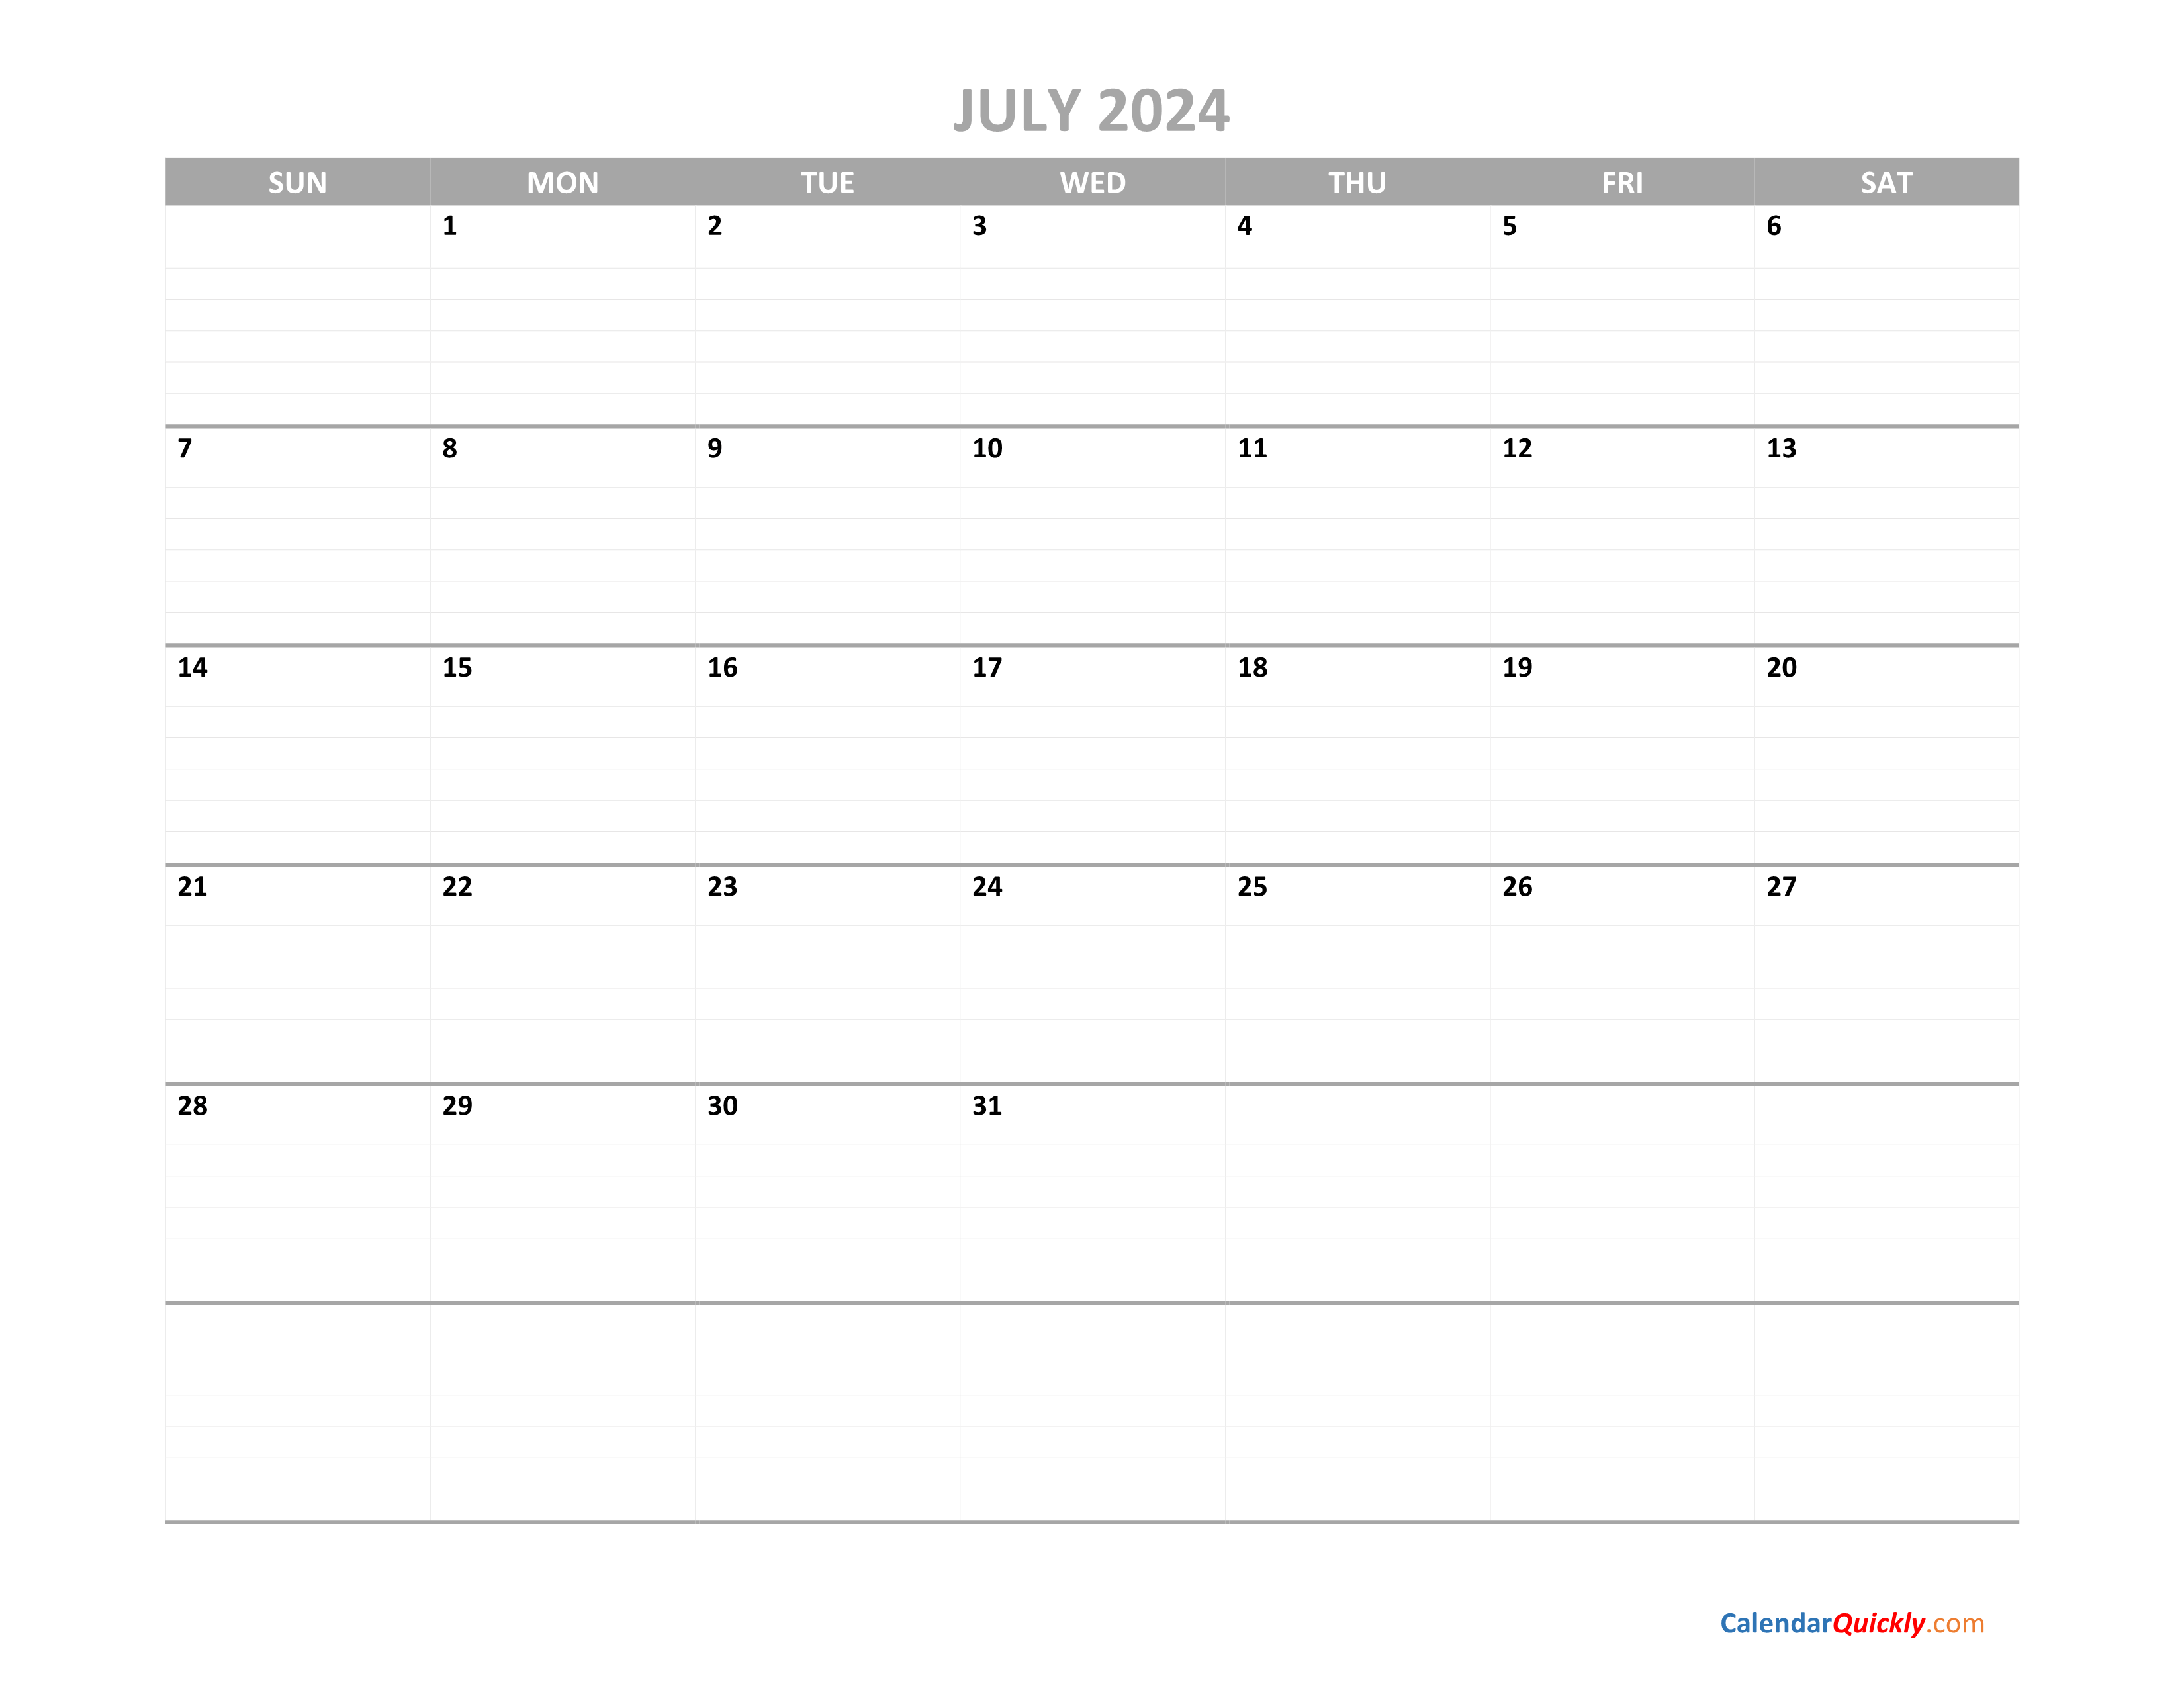 july-calendar-2024-printable-calendar-quickly